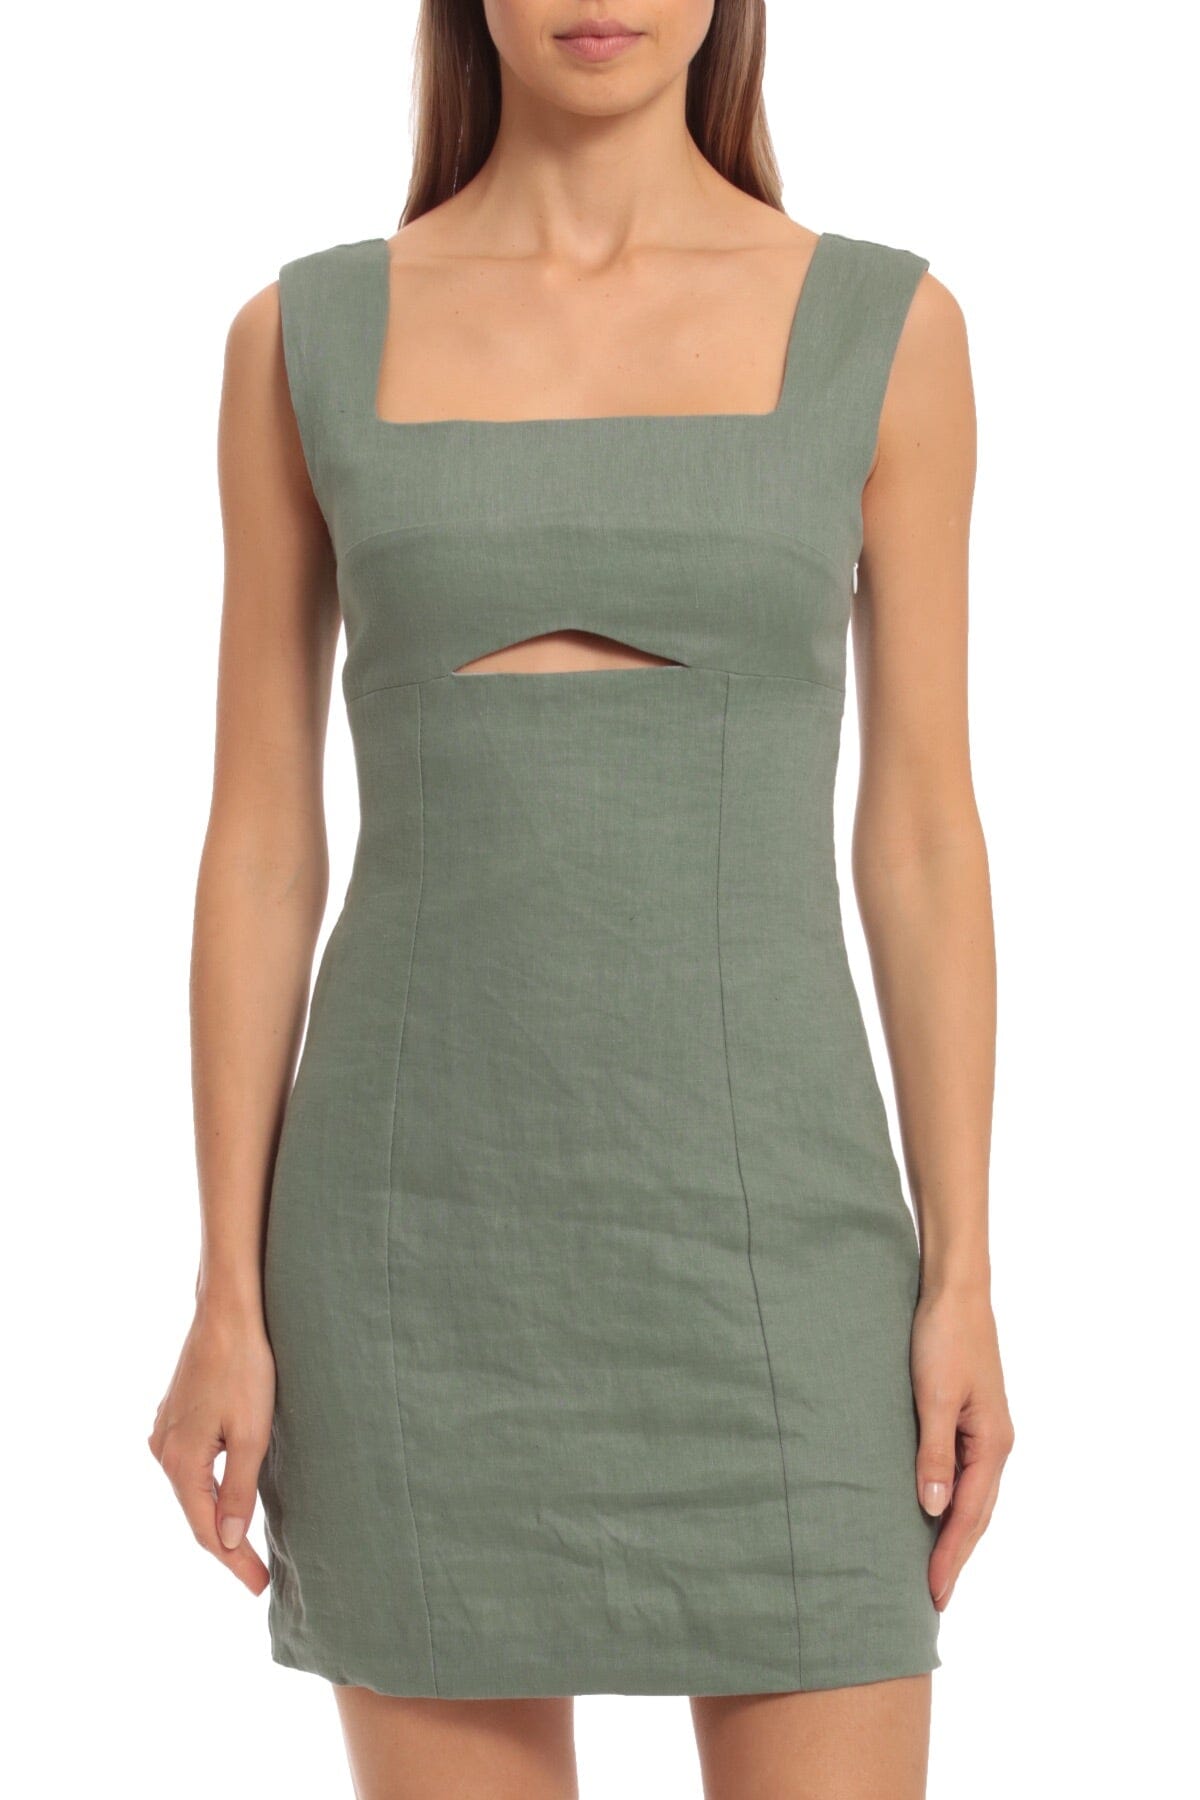 Cutout Linen Blend Mini Dress Avec Les Filles Green square neckline fully lined interior women's flattering Spring 2023 dresses